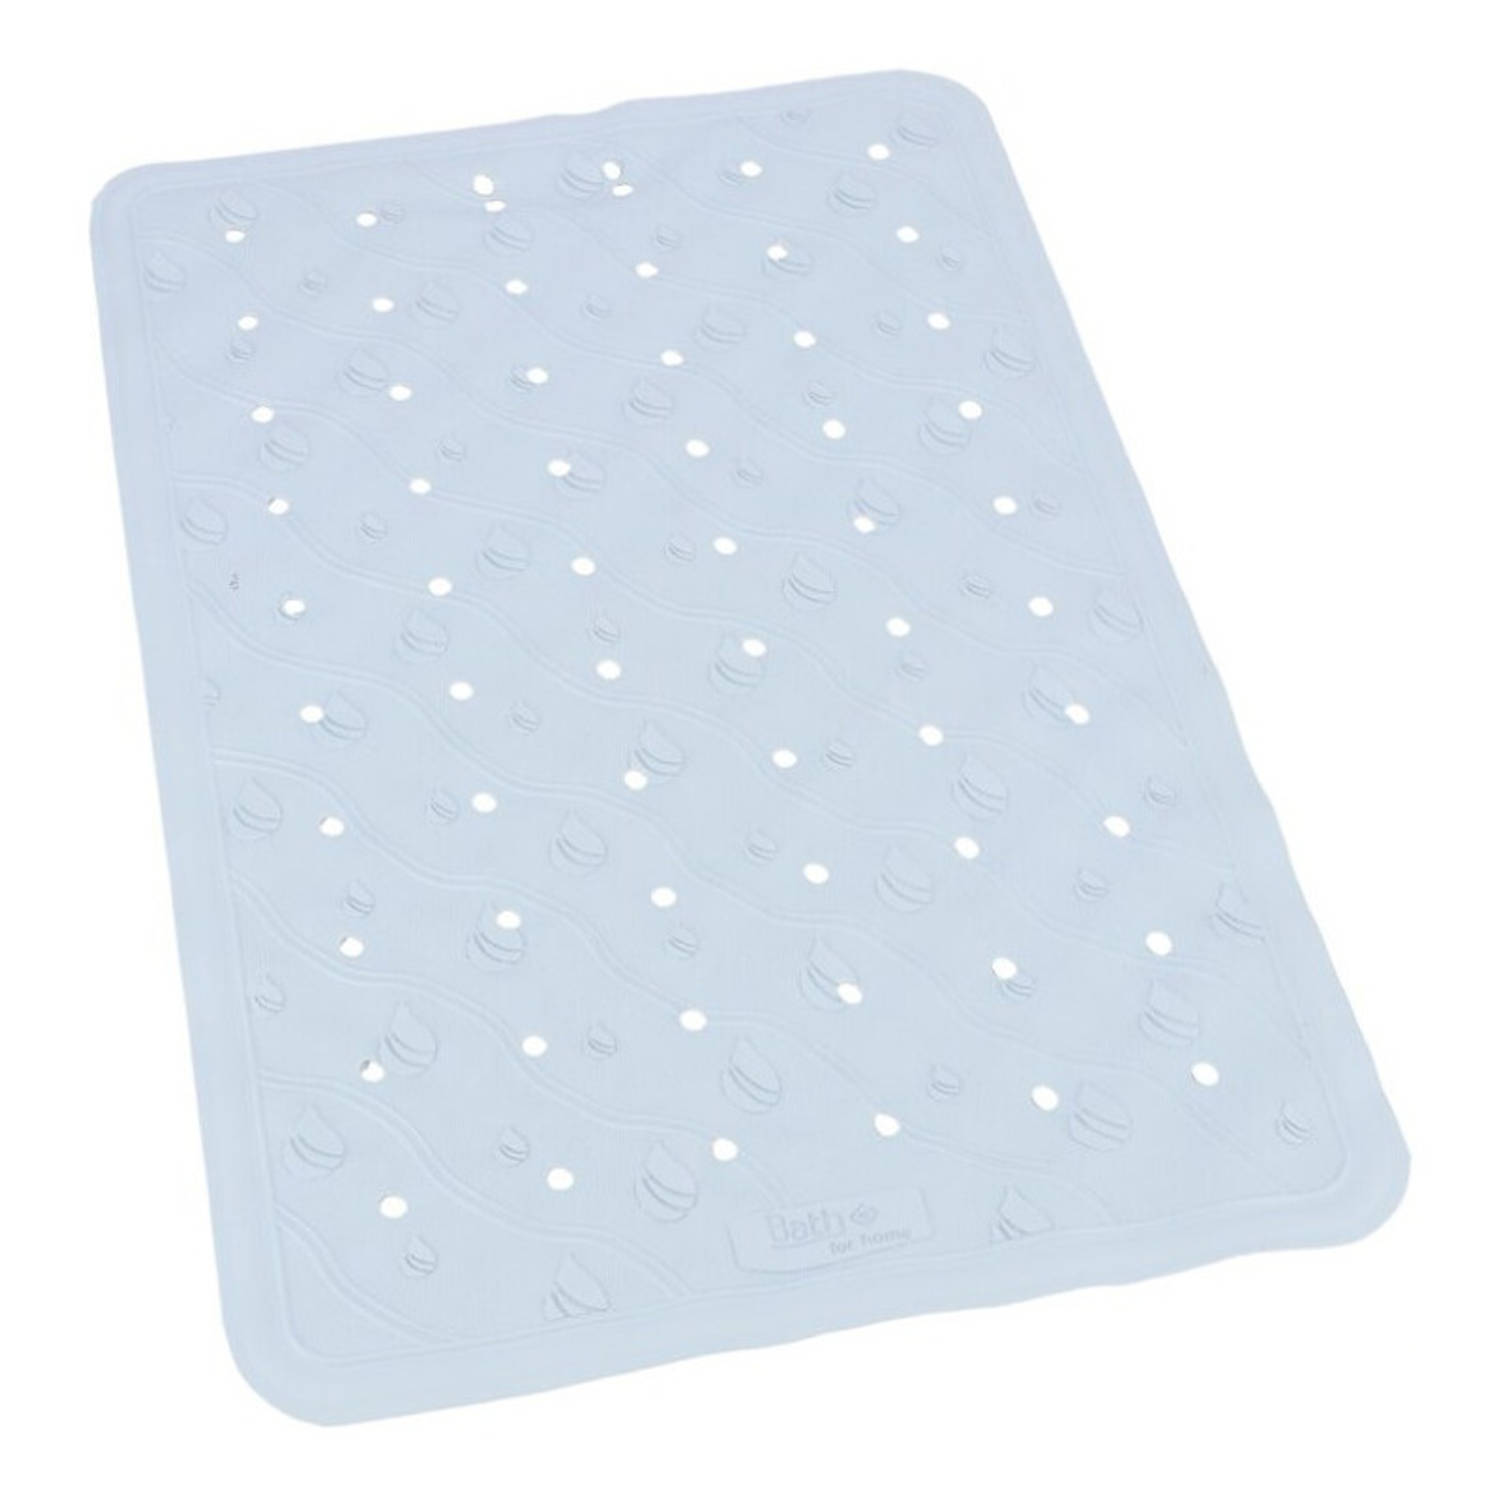 Lichtblauwe anti-slip badmat 36 x 57 cm rechthoekig - Badmatjes